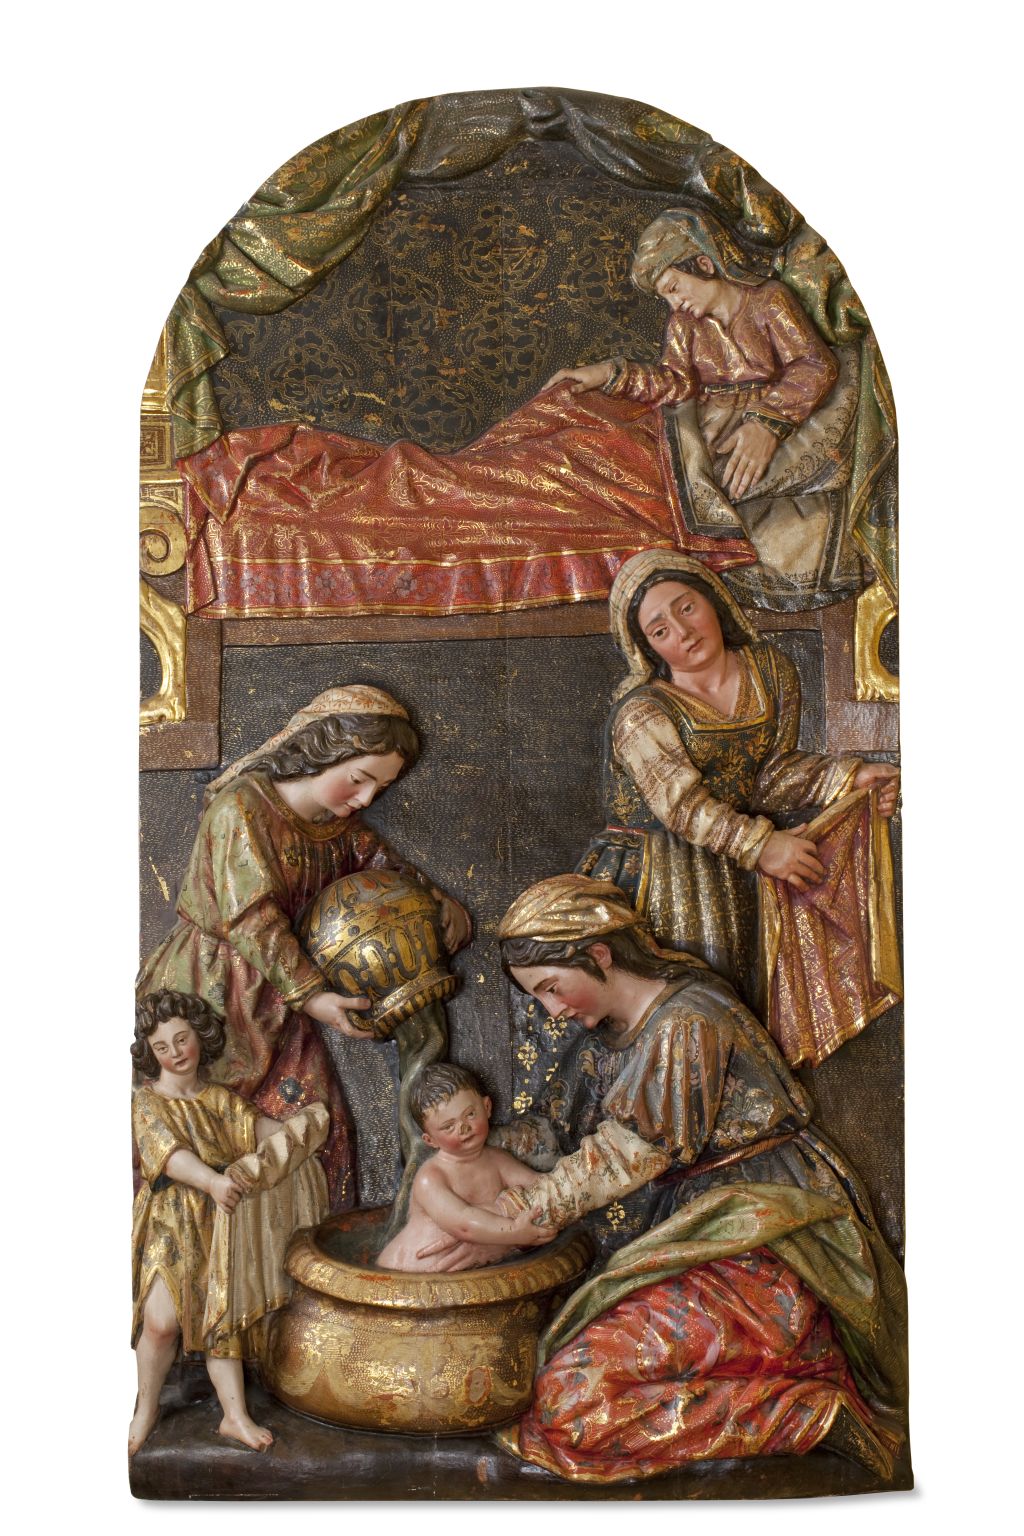 Felipe de RIbas, Nativity of the Virgin